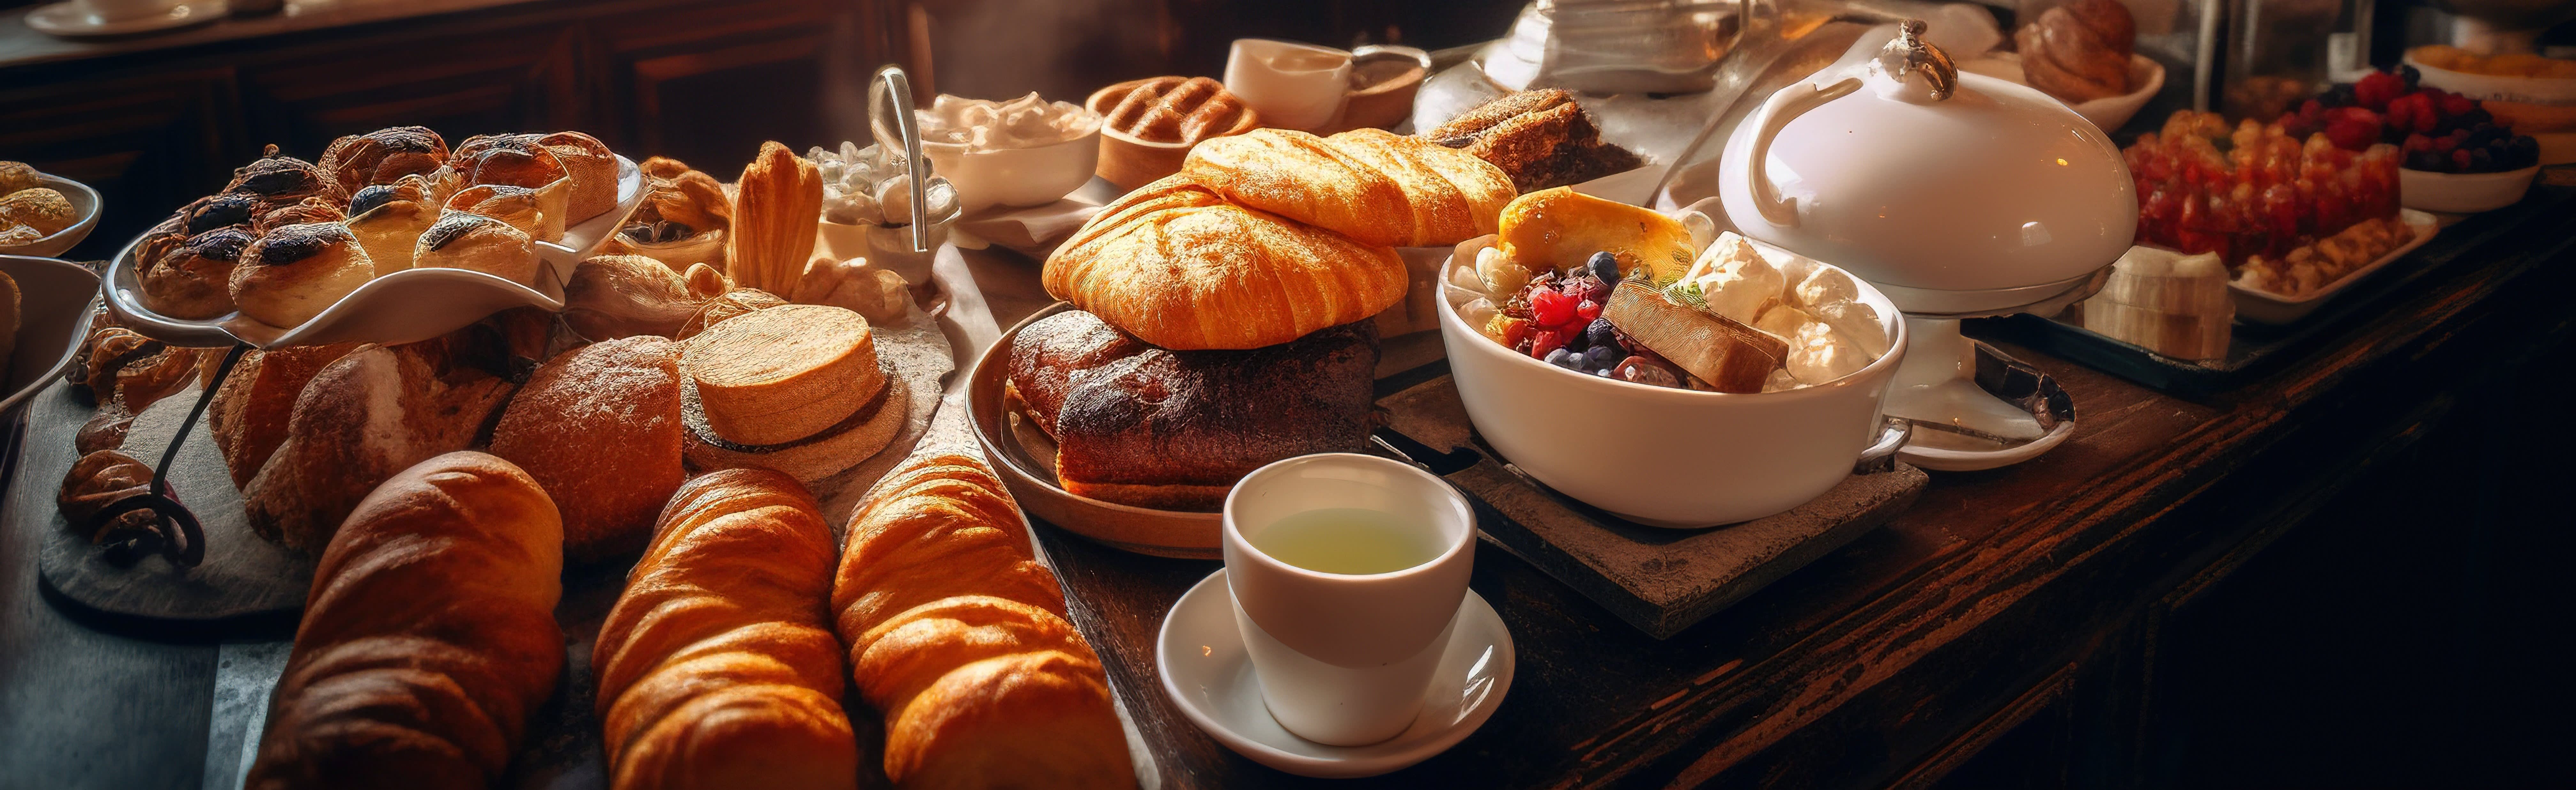 Breakfast Spread - Stock  - Pastries and hot drinks in a breakfast spread 